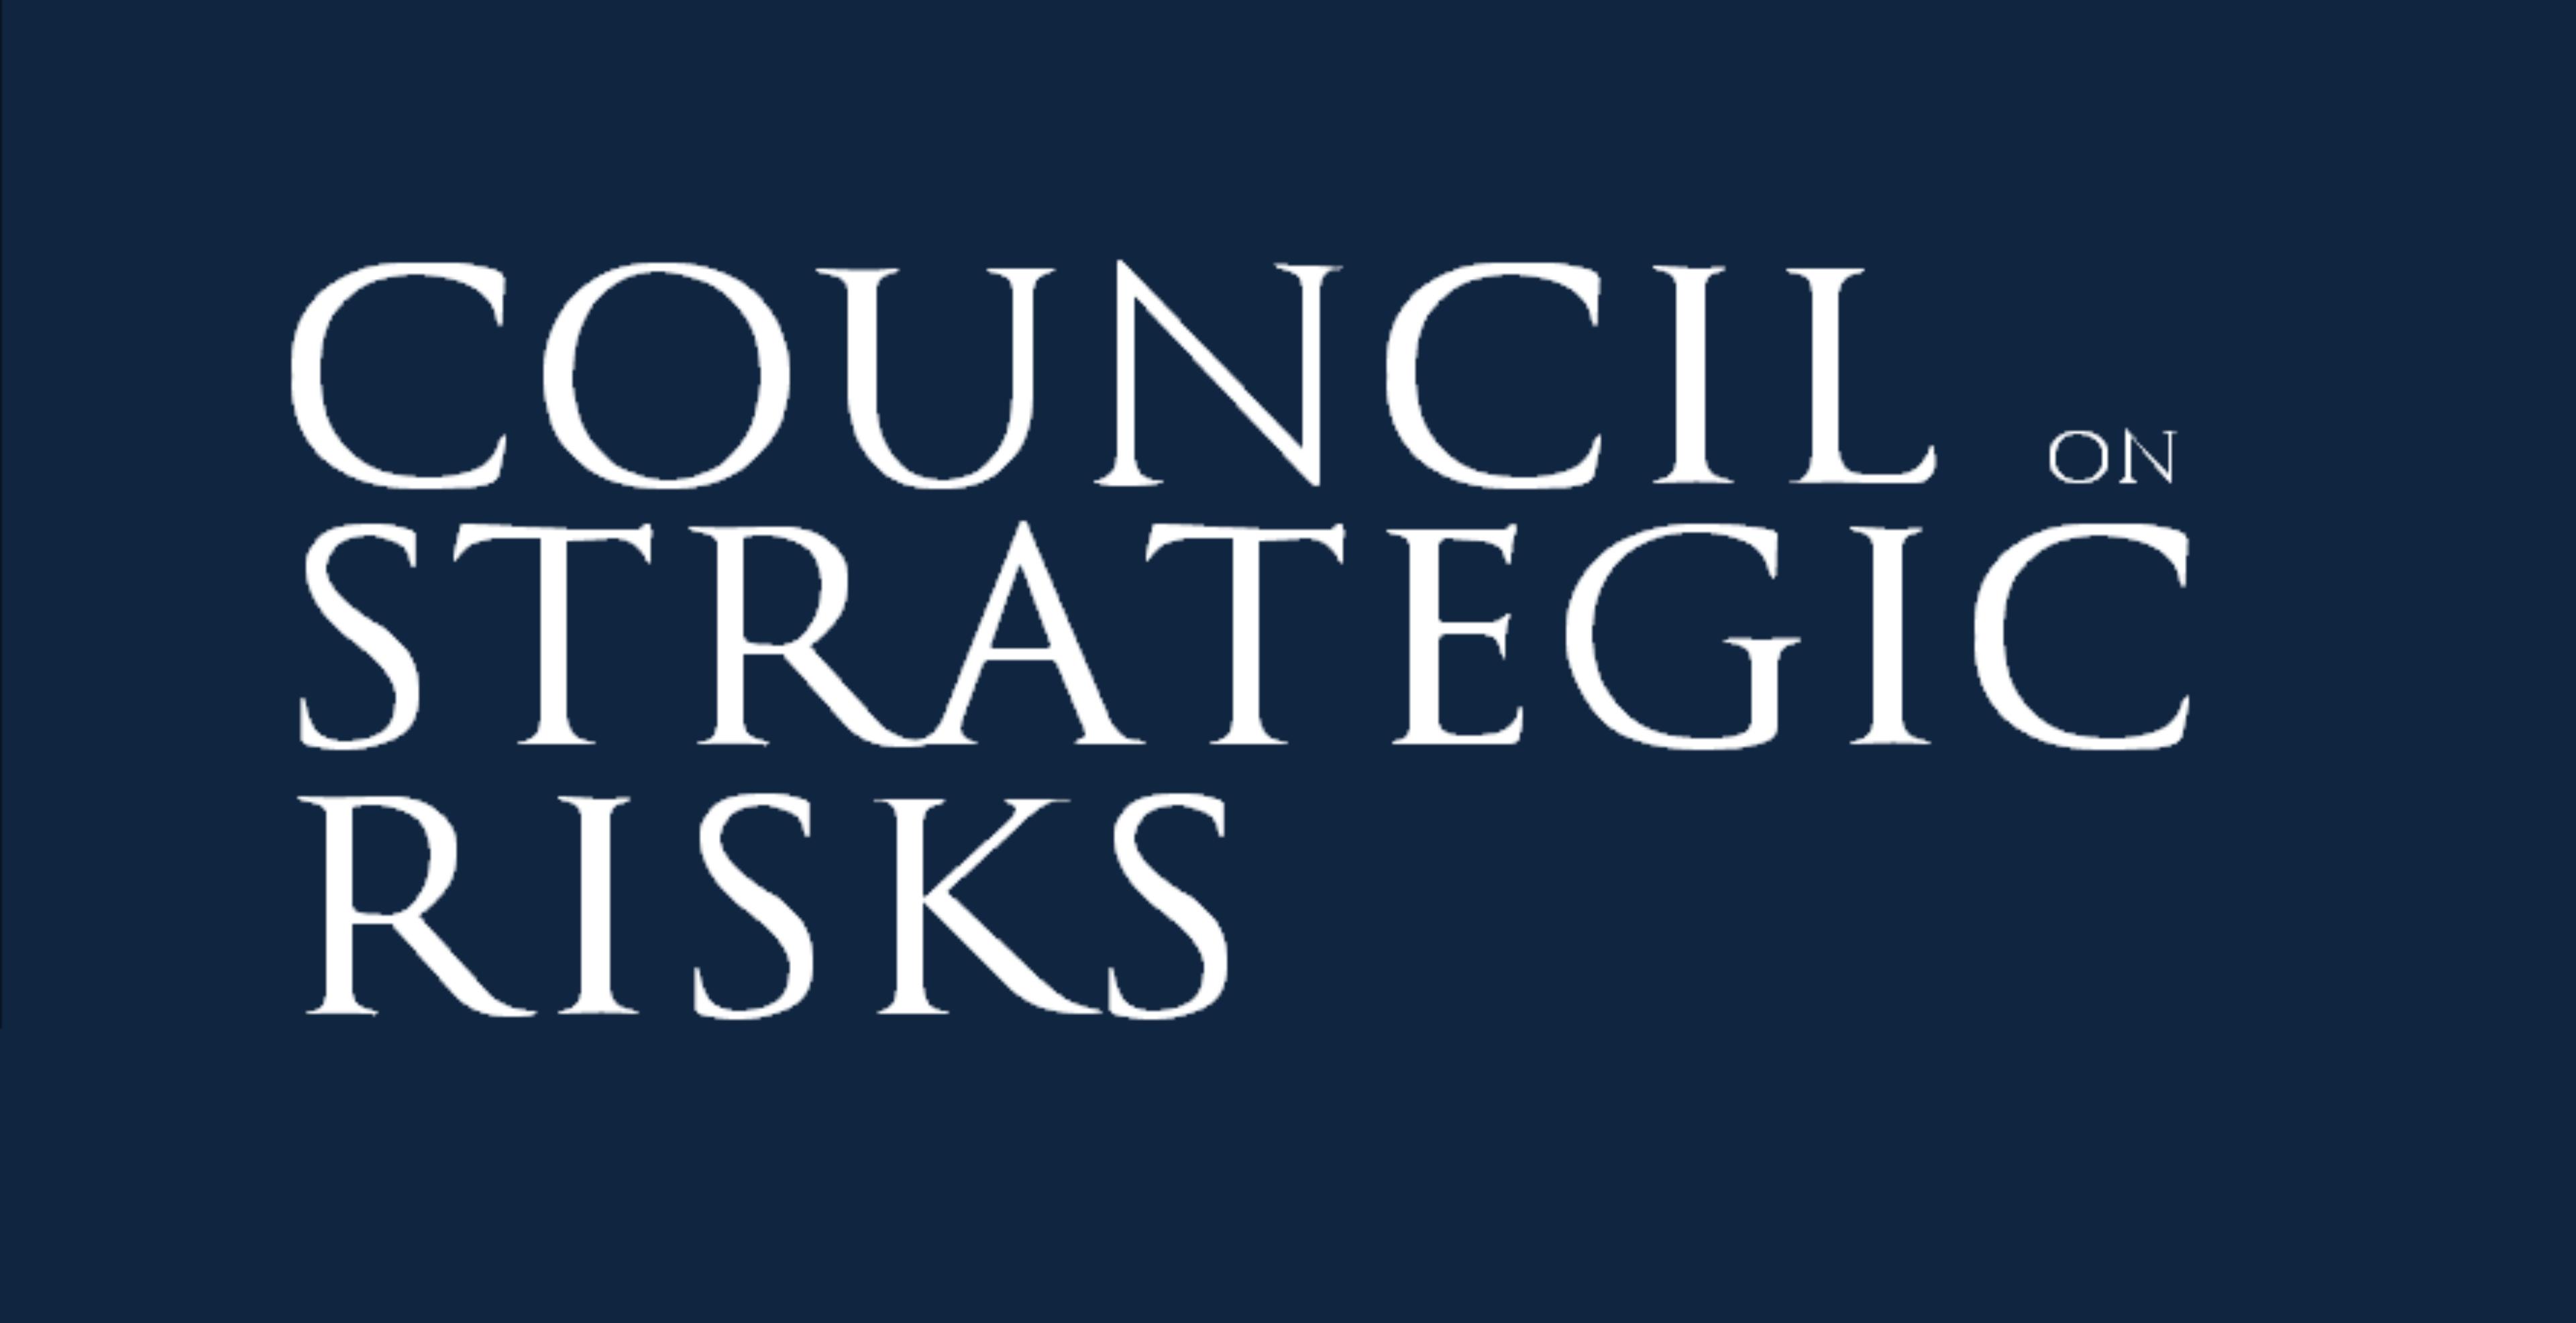 Council on Strategic Risks (CSR)